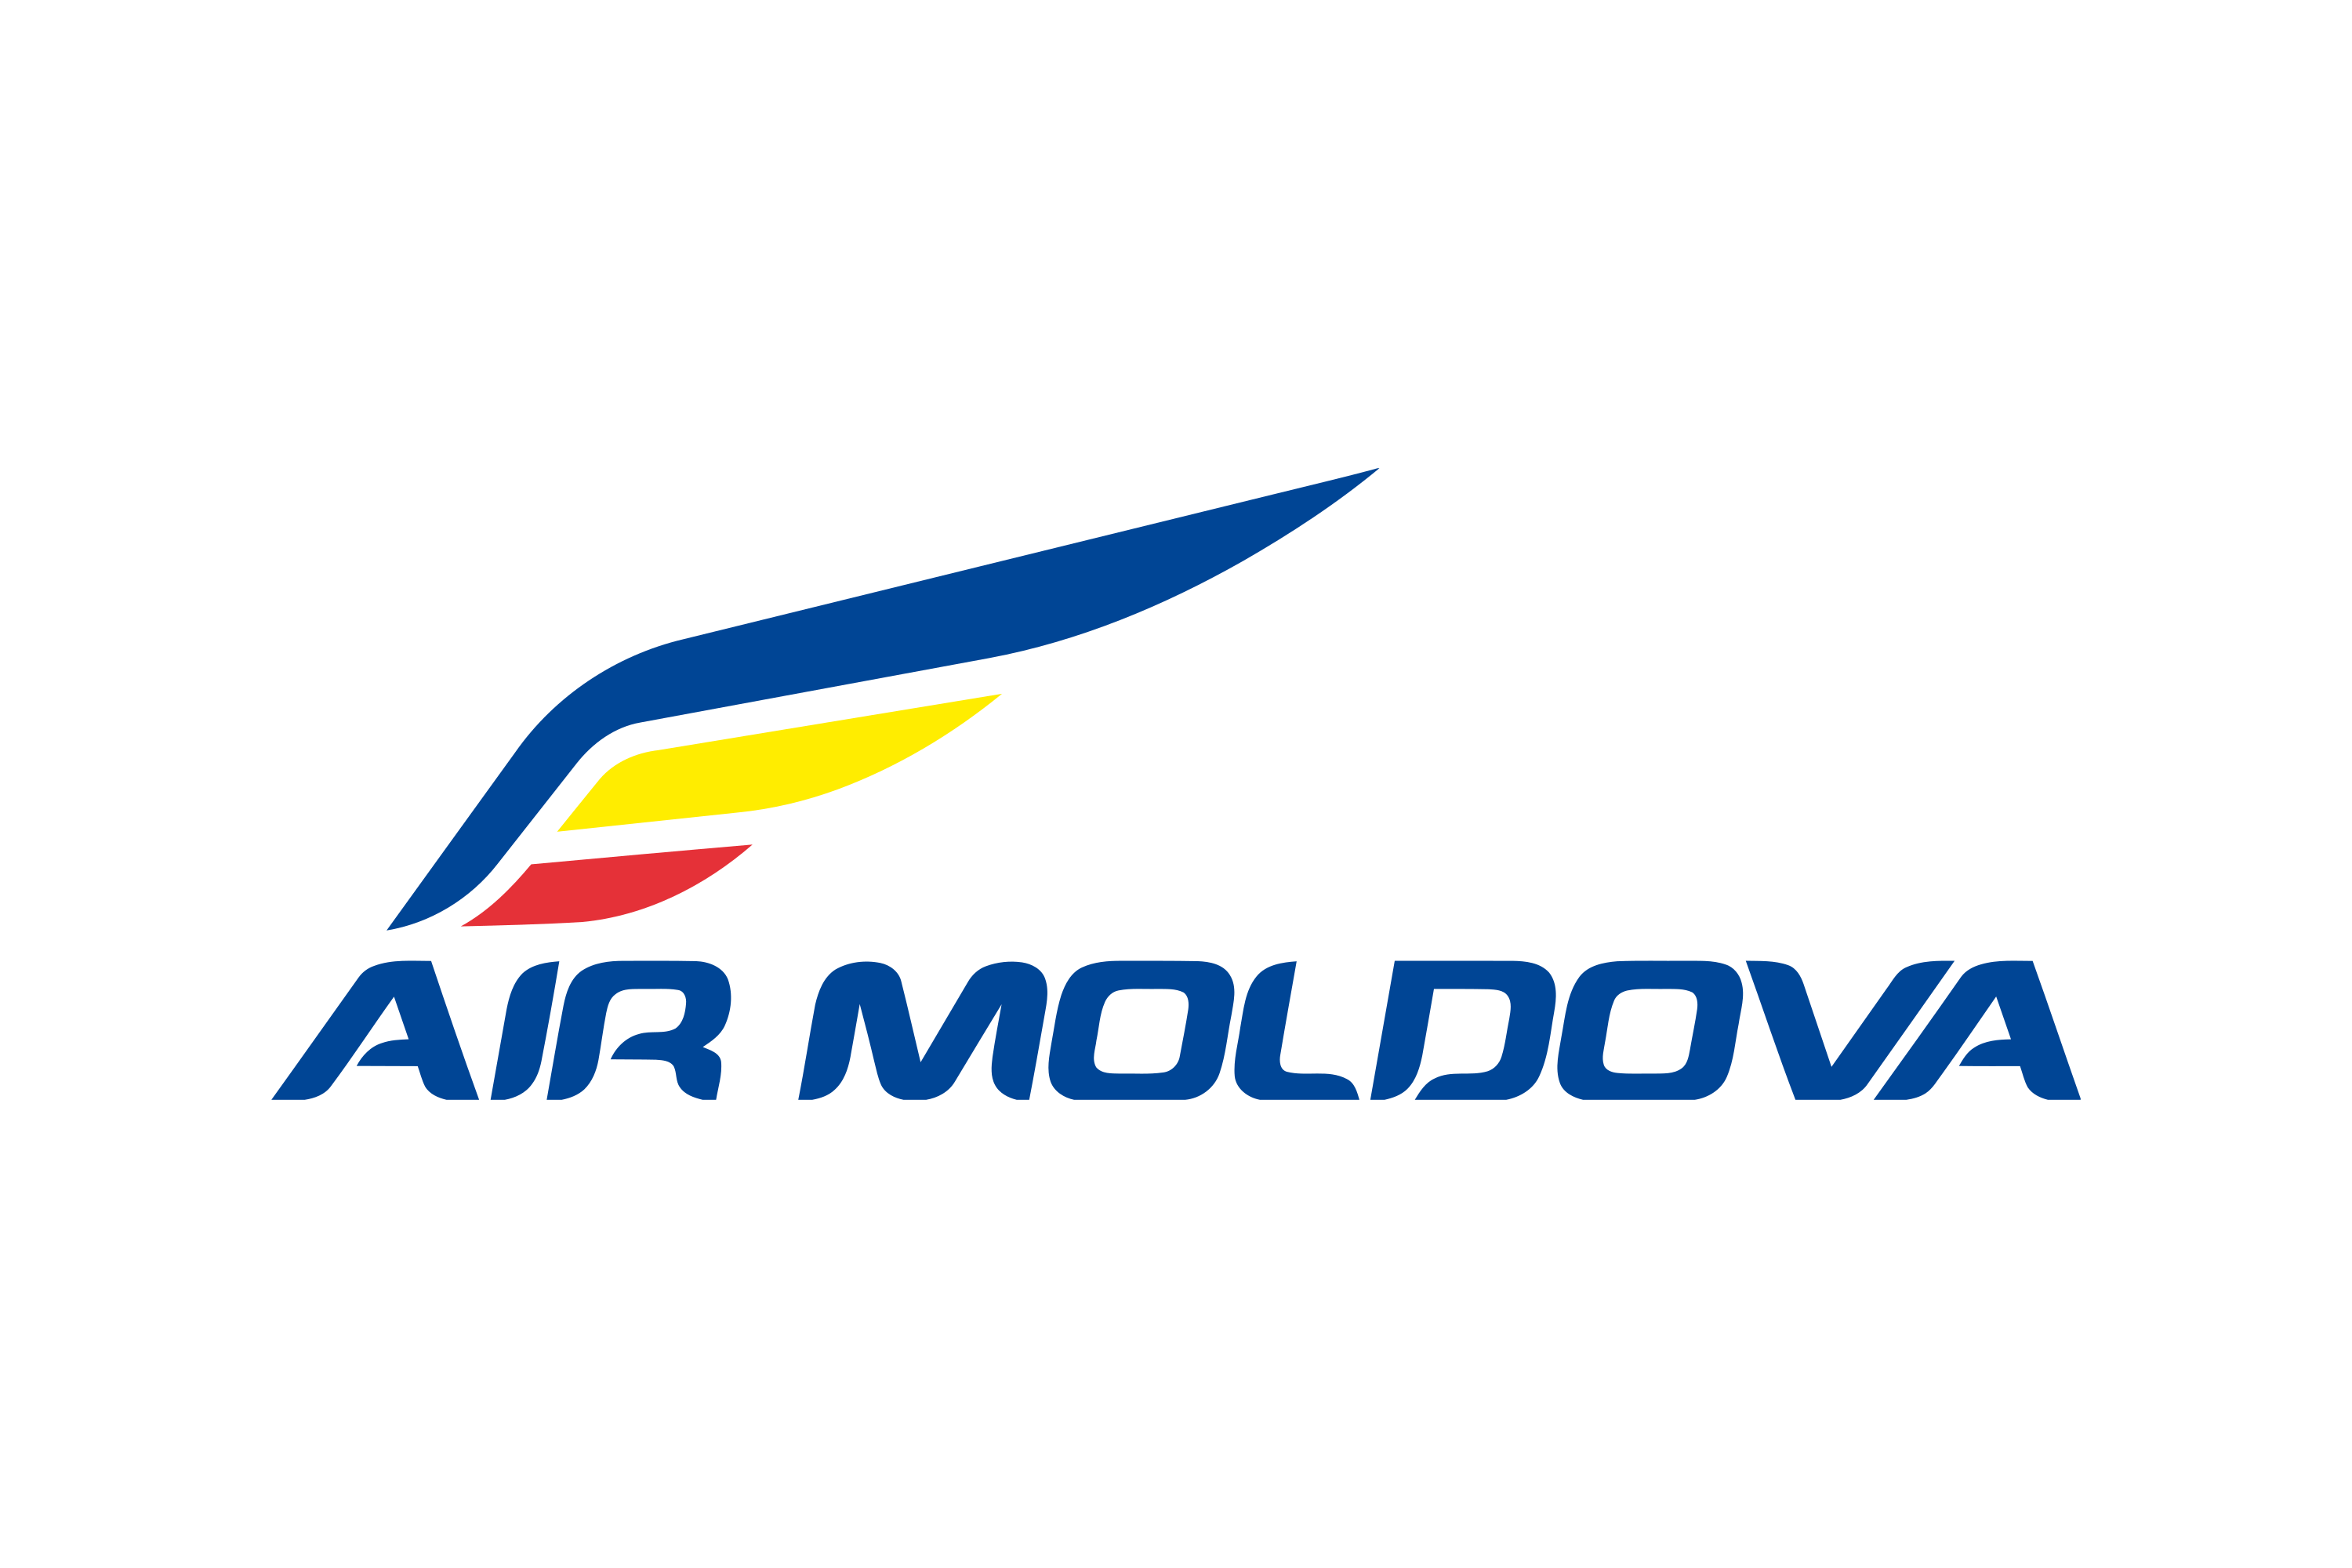 Download Air Moldova Logo in SVG Vector or PNG File Format - Logo.wine